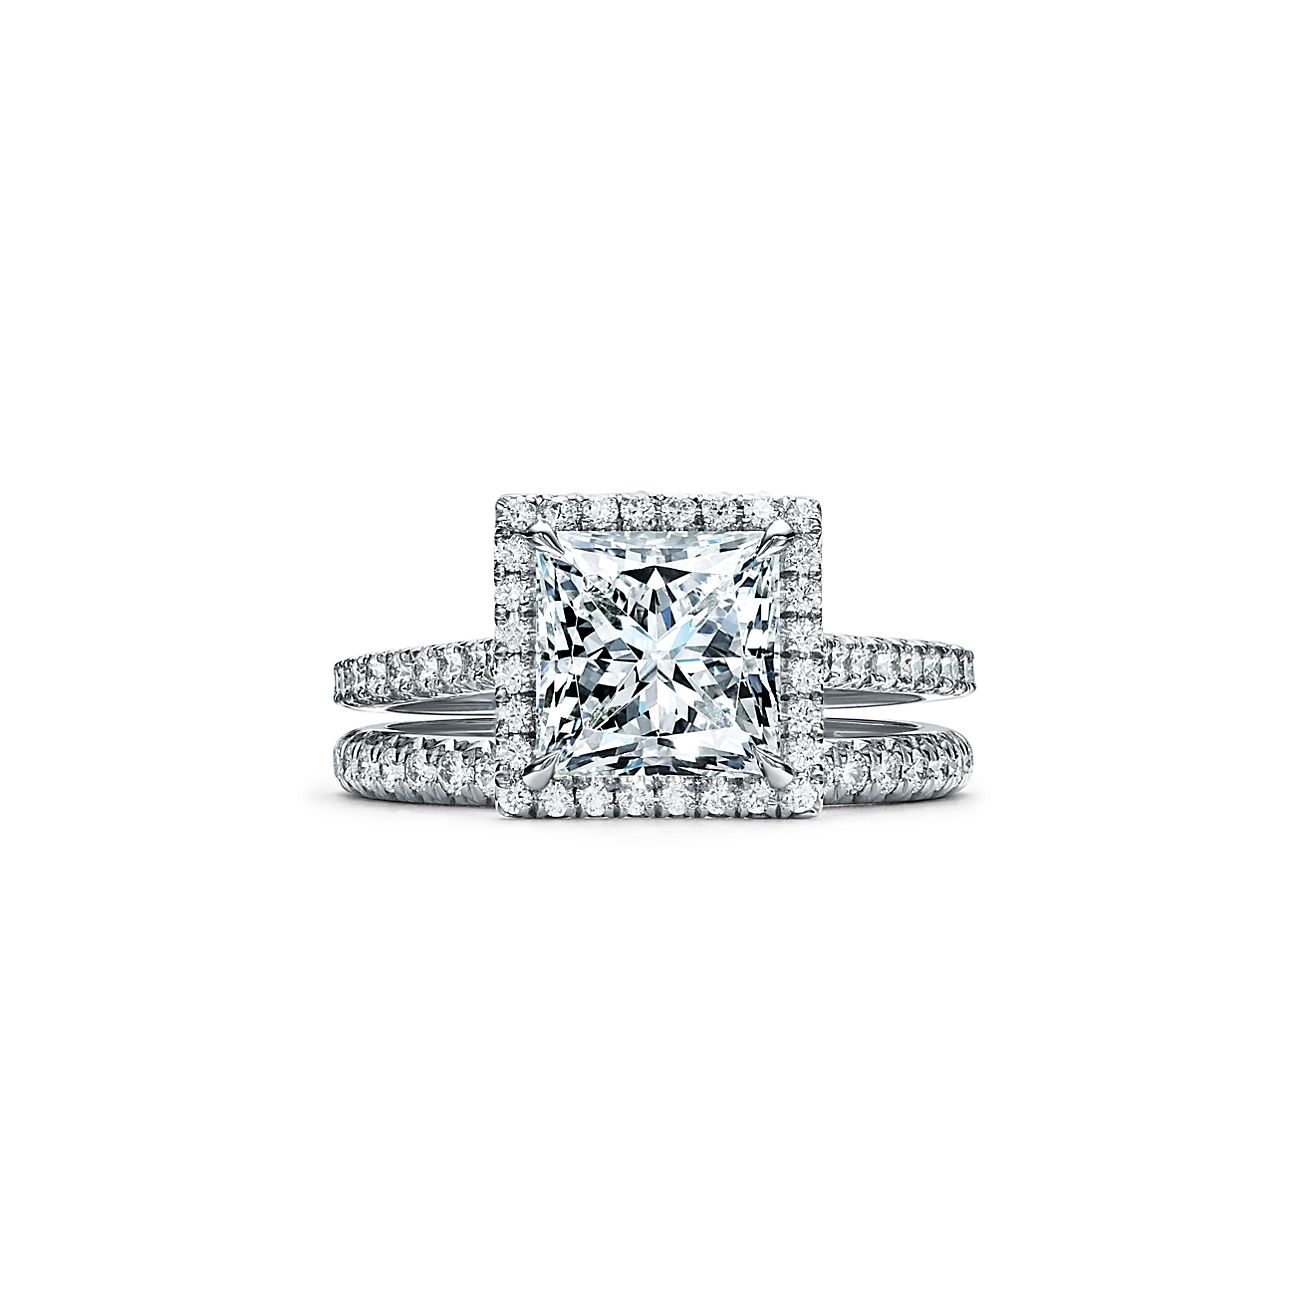 Amazon.com: DesignersJewel 1 Carat Tiffany Style Moissanite Engagement Ring,  Moissanite Diamond, White Gold Plated Sterling Silver Rings for Women,  Handmade Wedding Promise : Handmade Products